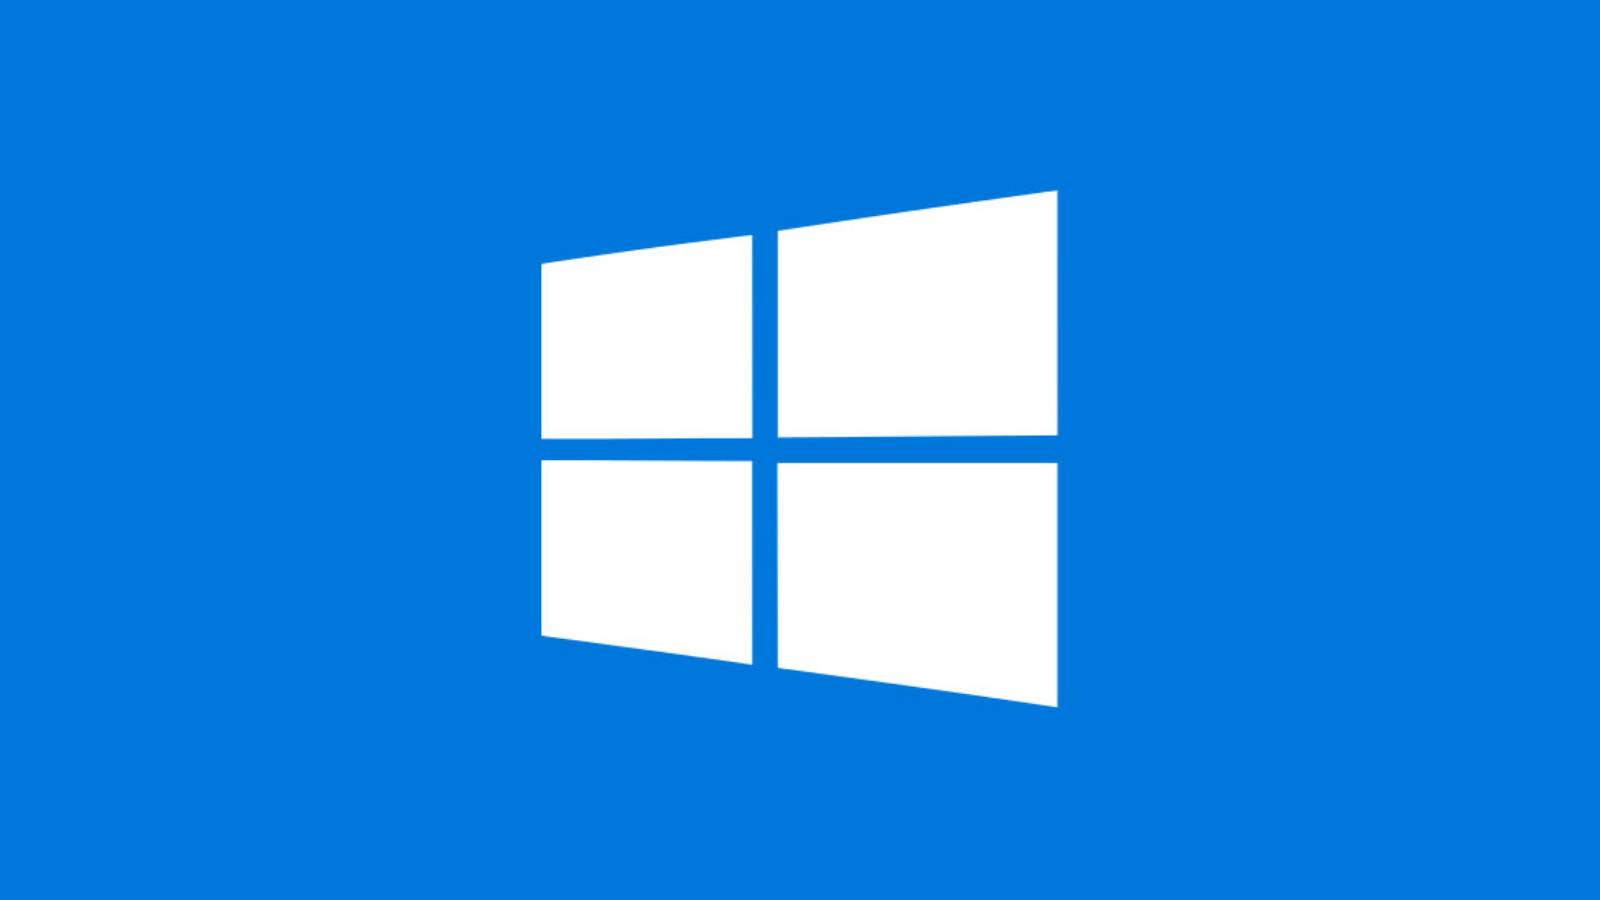 Secondary Windows 10